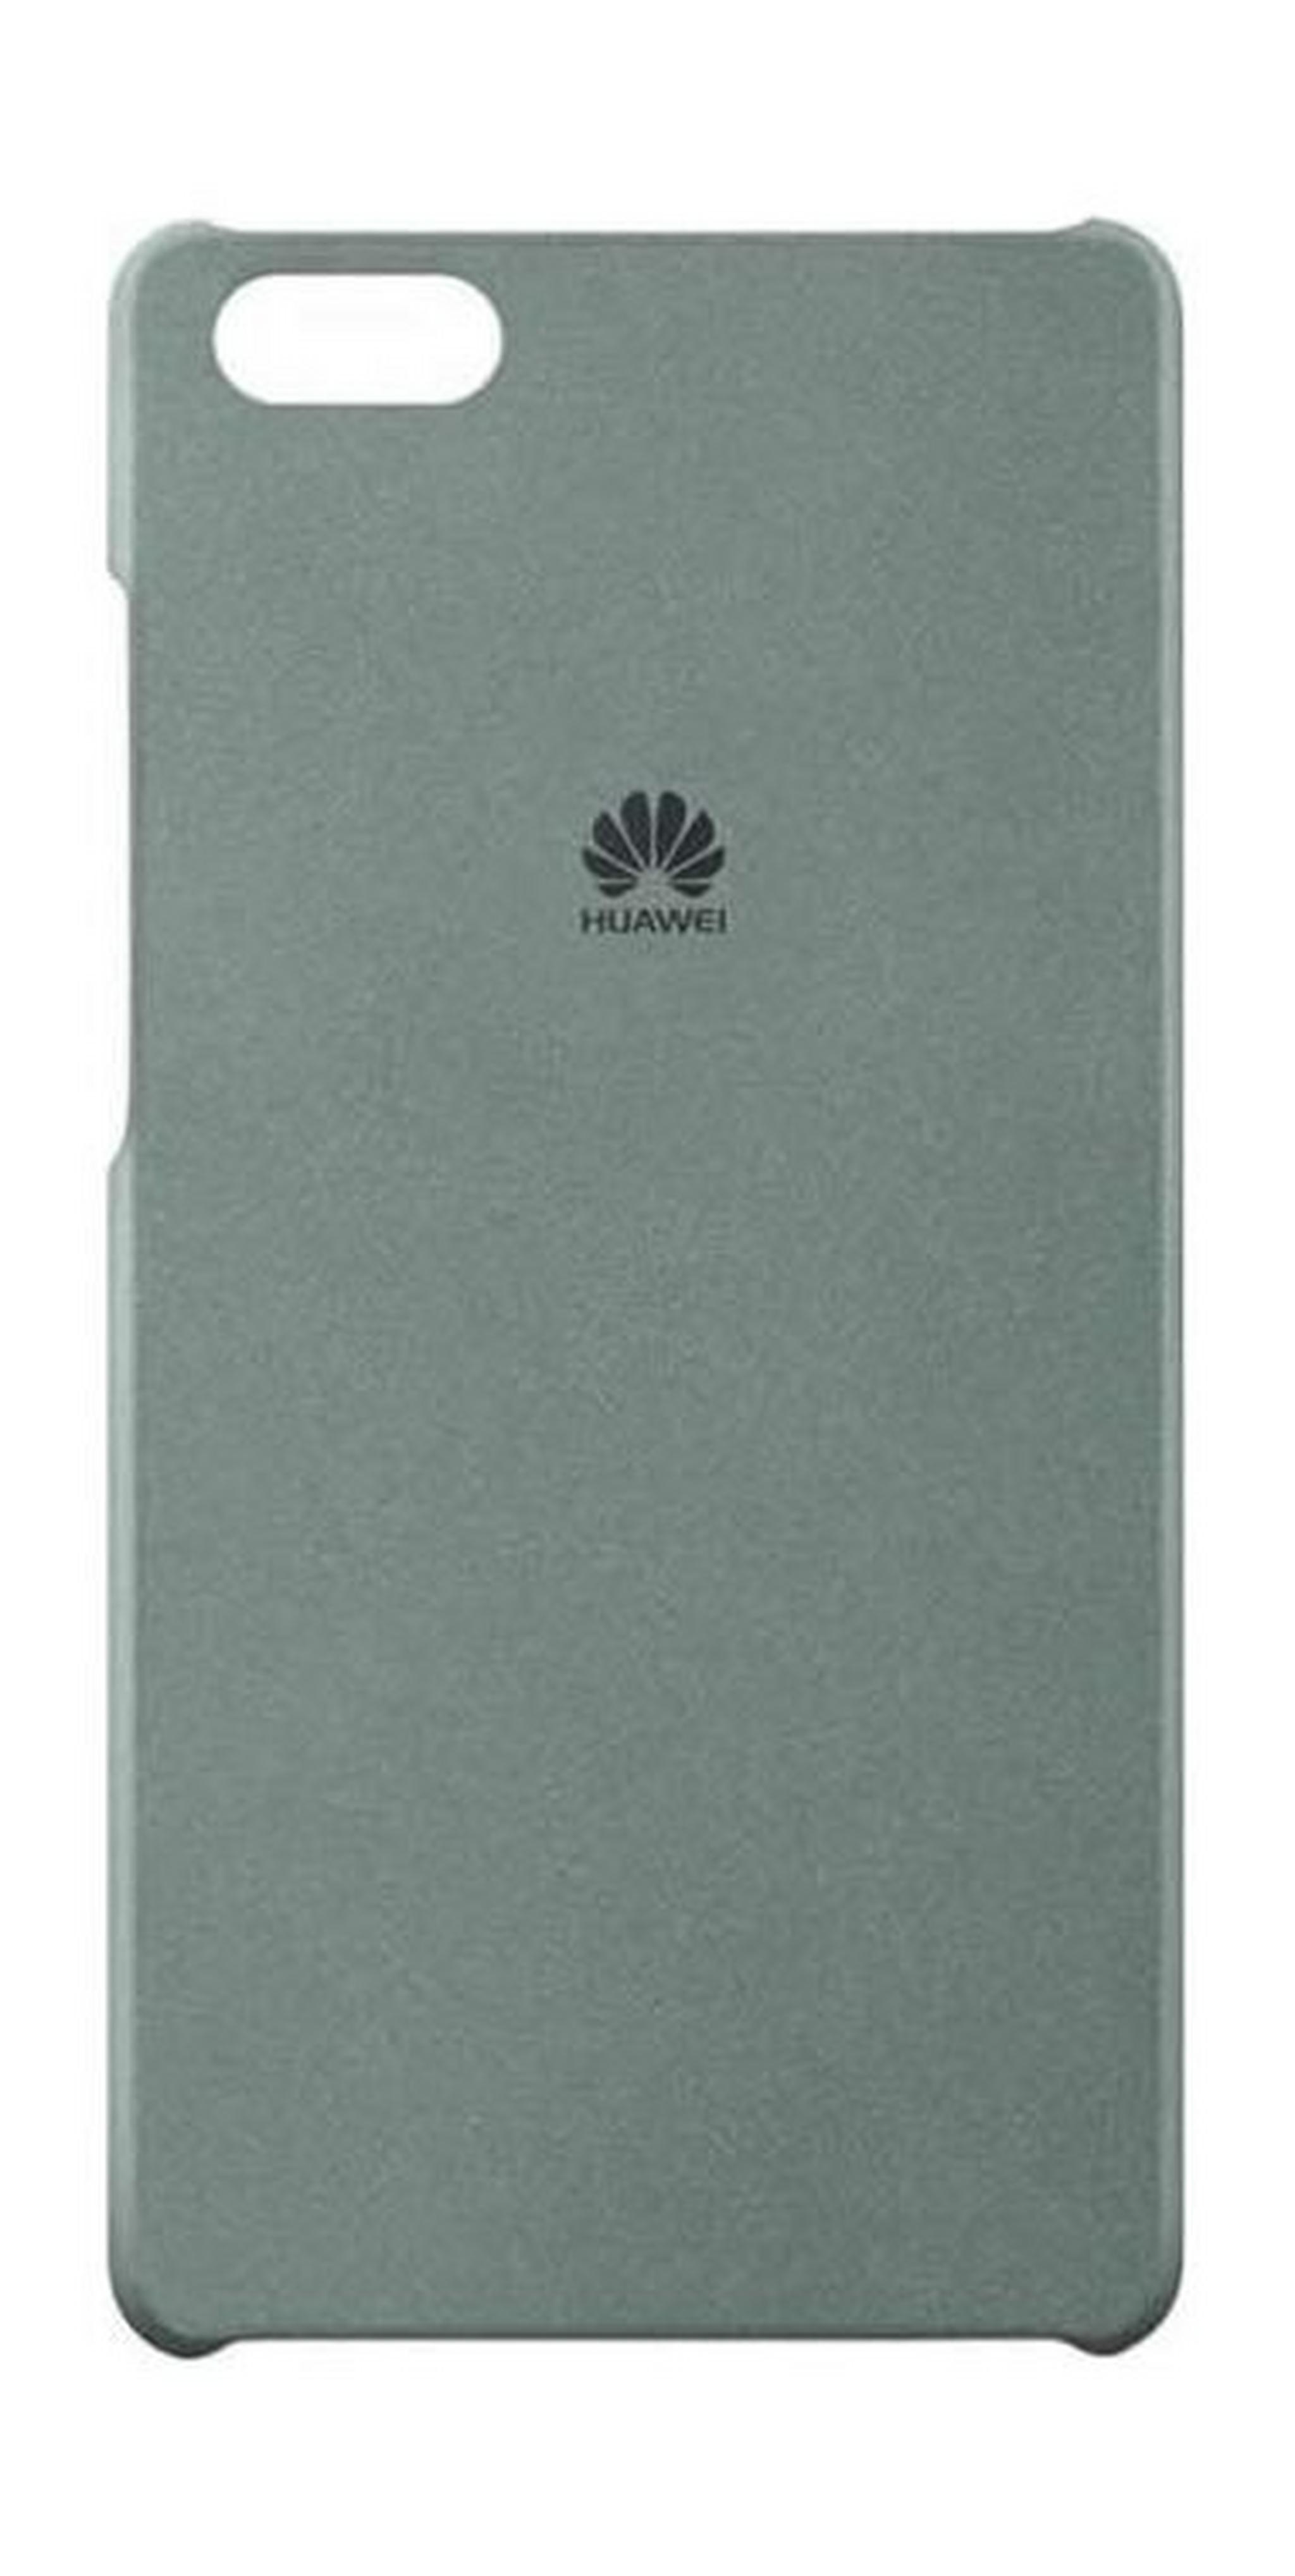 Huawei Slim Protective Case for Huawei P8 Lite (51990915) - Dark Grey